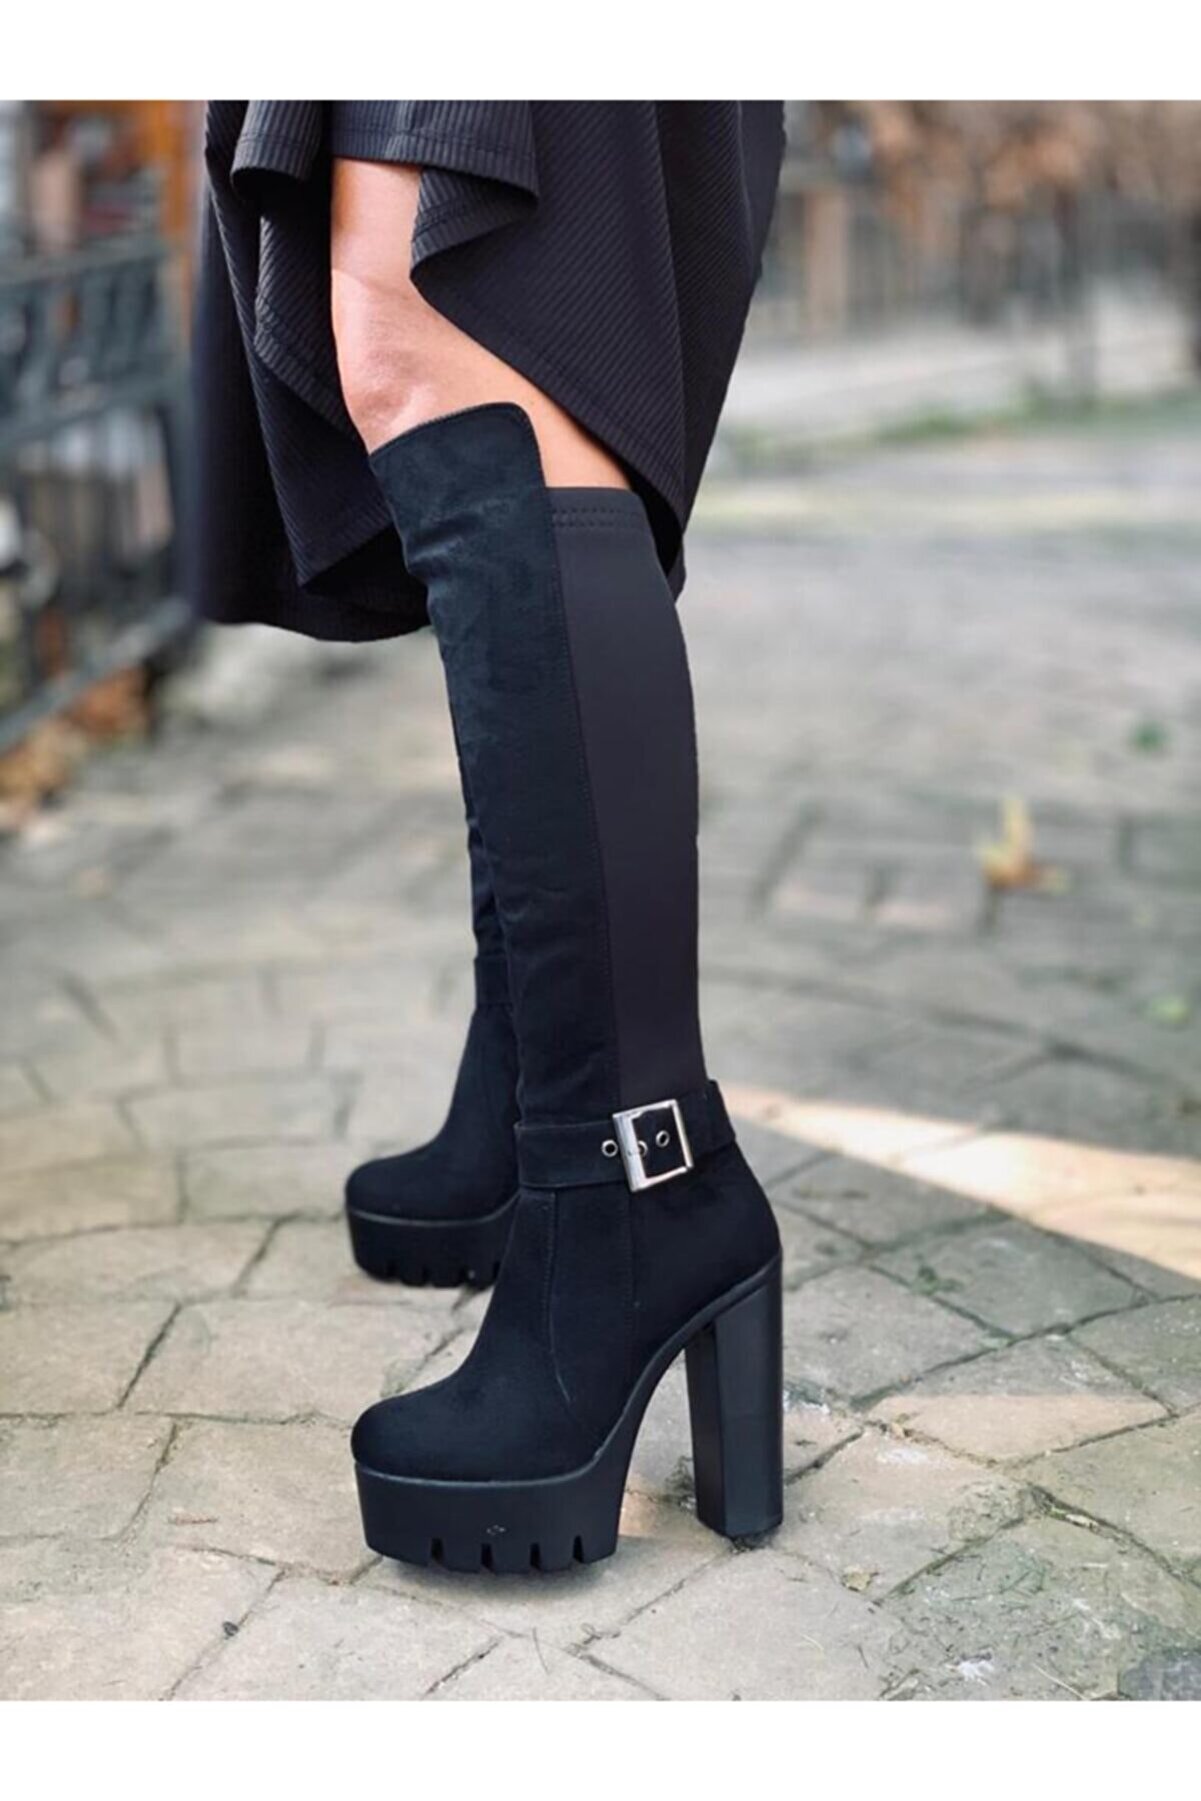 MoreLife Kadın Siyah Süet Uzun Platform Topuk Streç Çizme